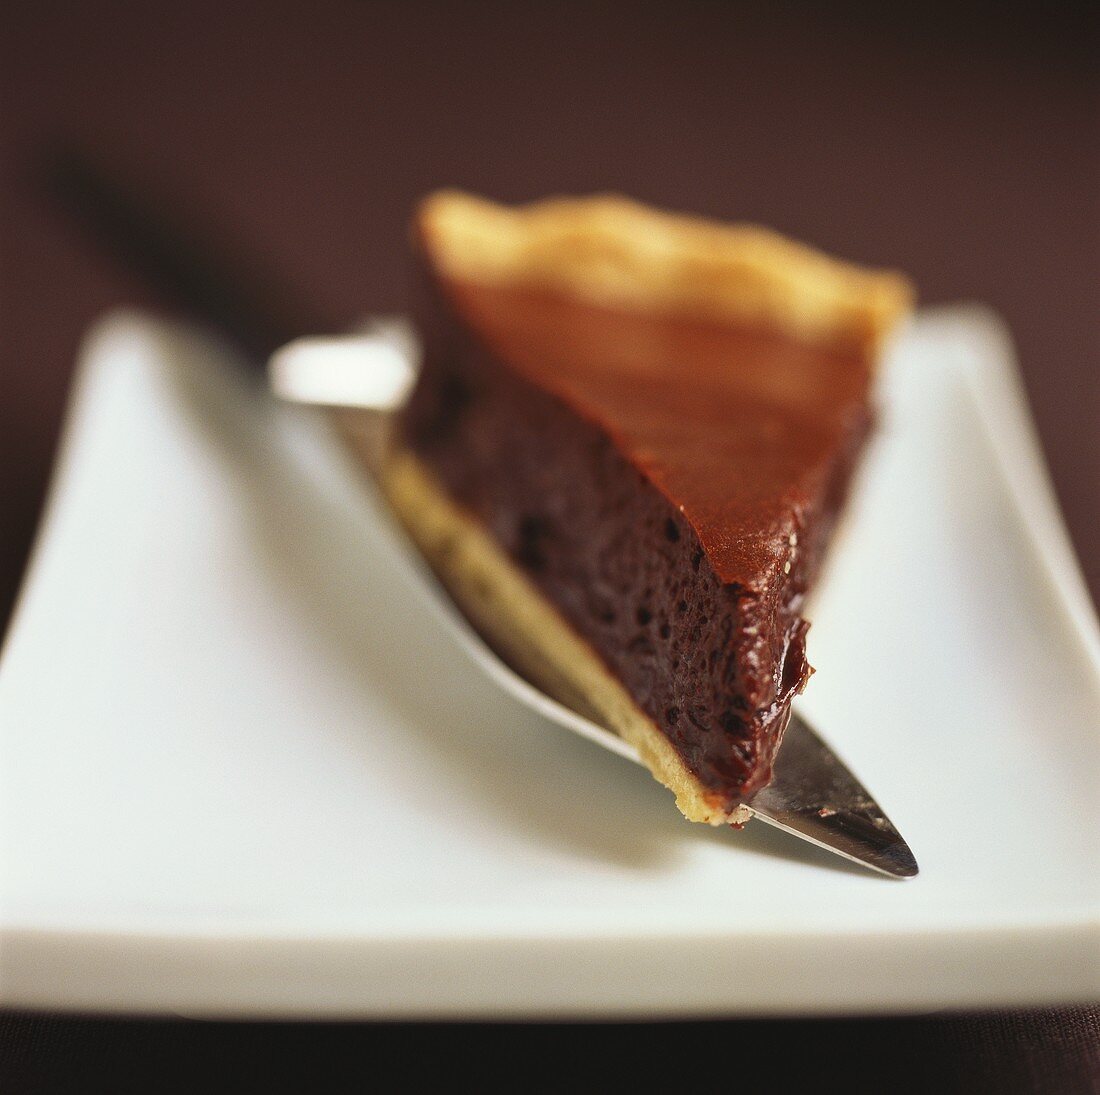 A piece of chocolate tart on server